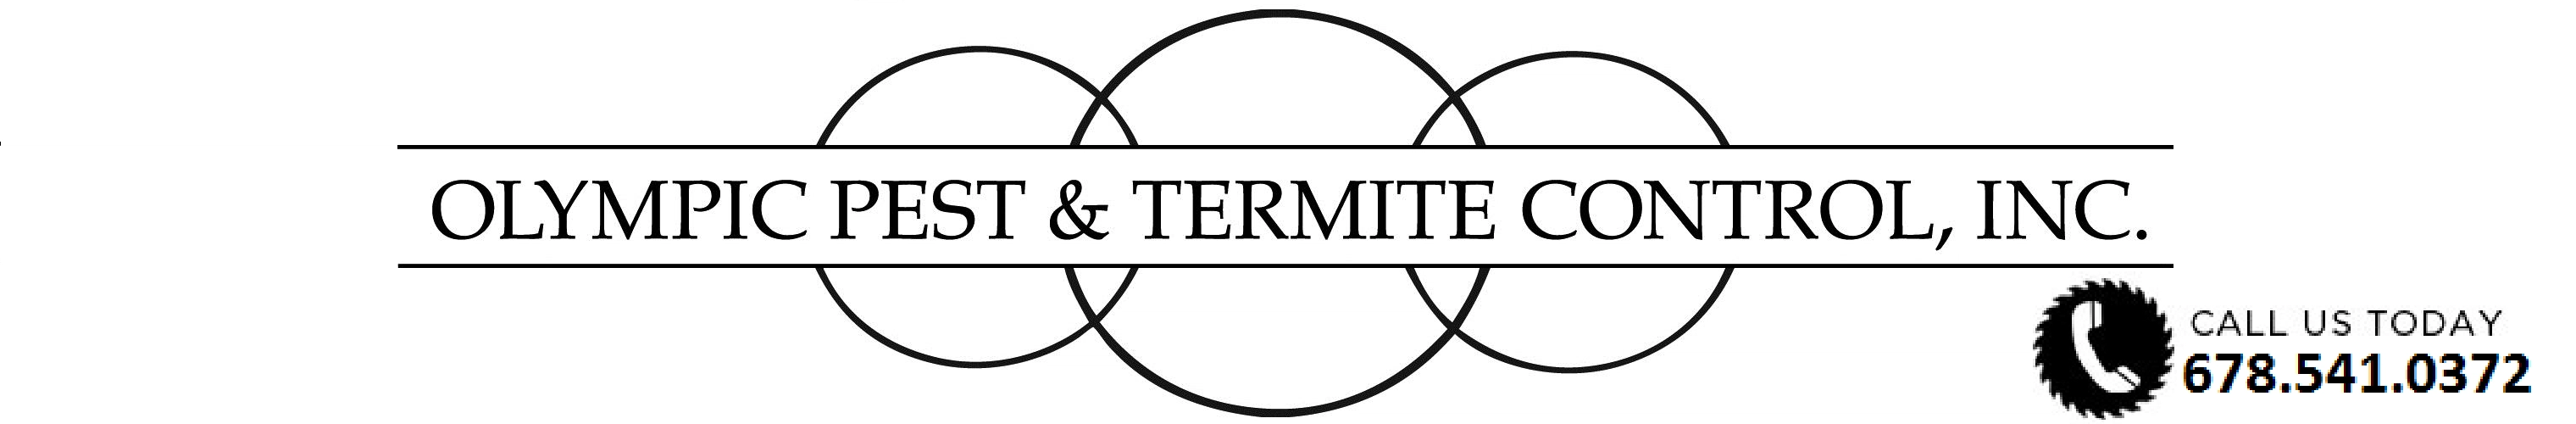 Olympic Pest & Termite Control, Inc. Logo